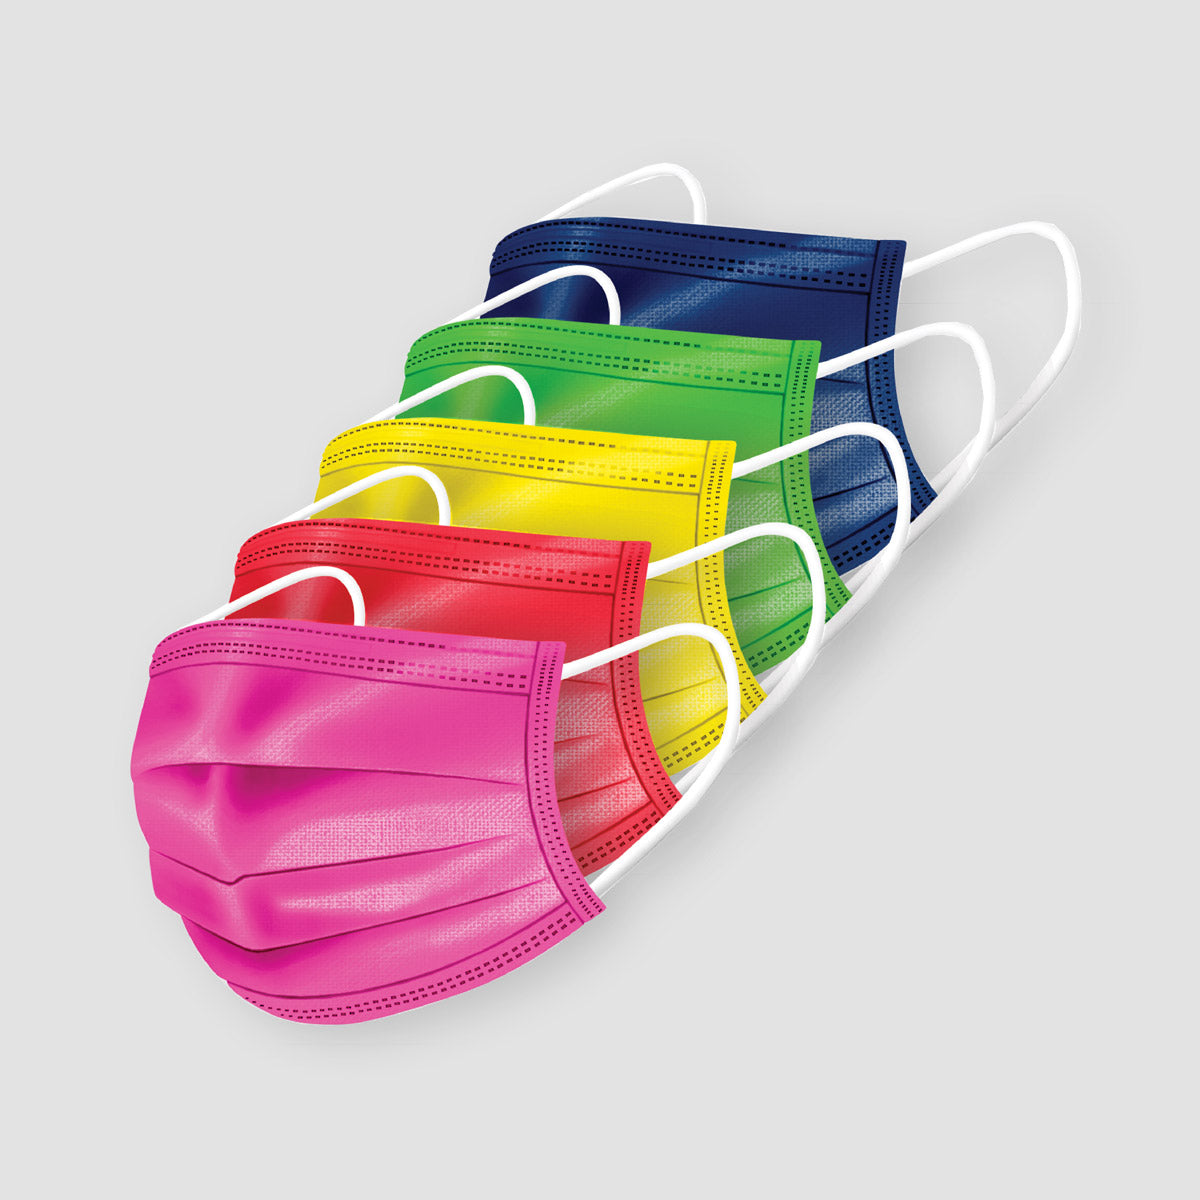 Medipop D Mask Desposable 5 Pack Rainbow Mix - Kids